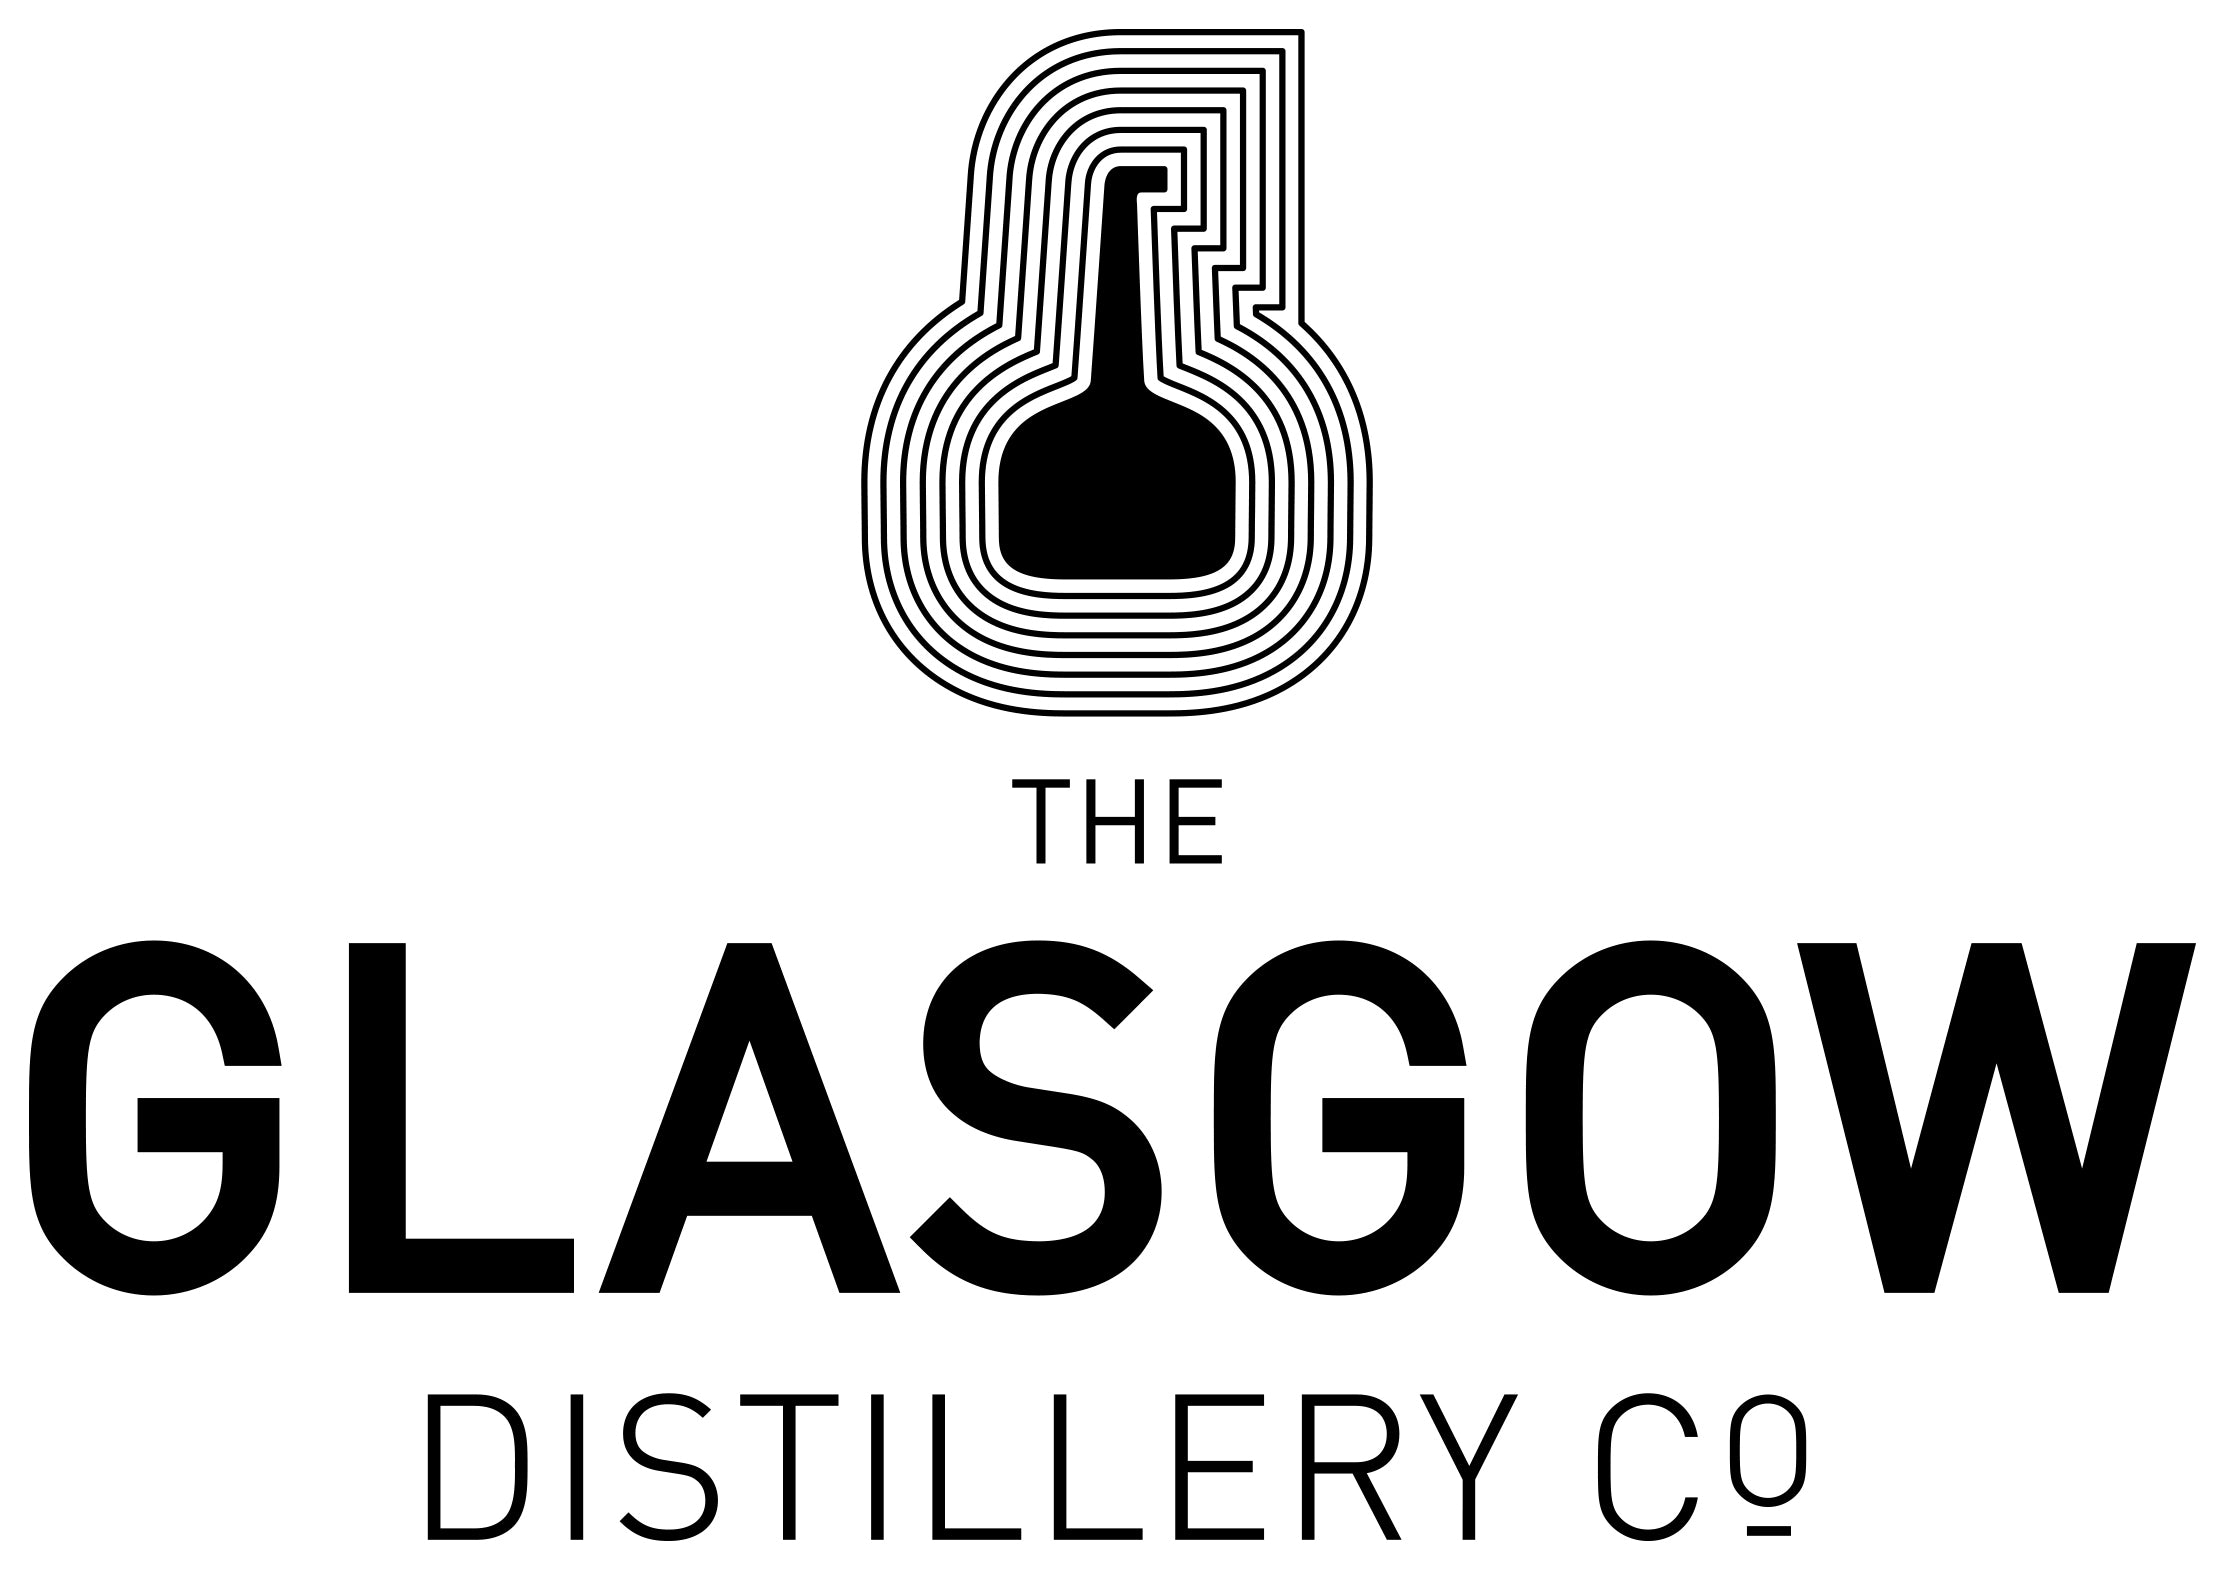 The Glasgow Distillery Company